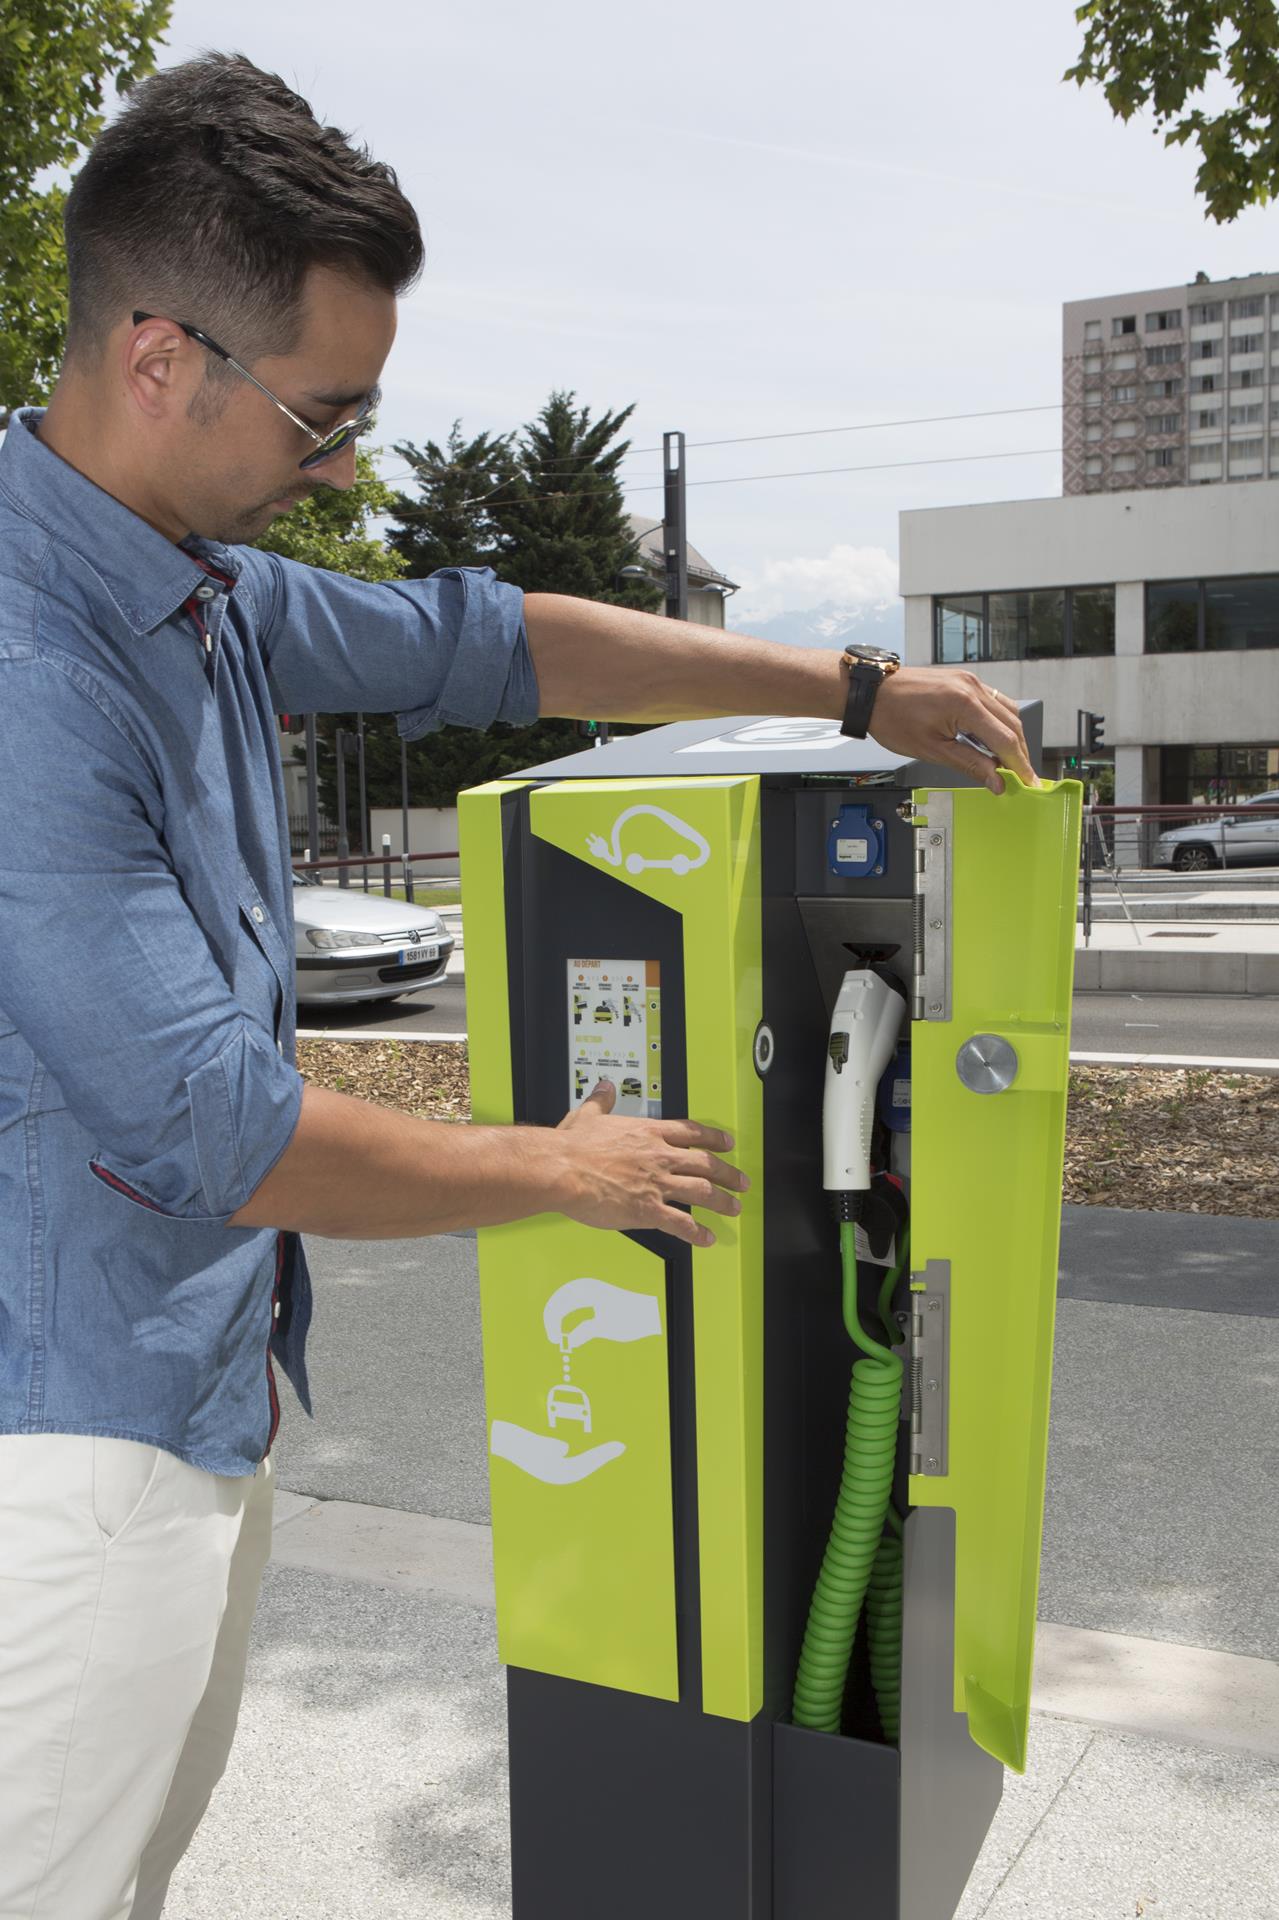 2014 Citélib by Ha:mo charging station